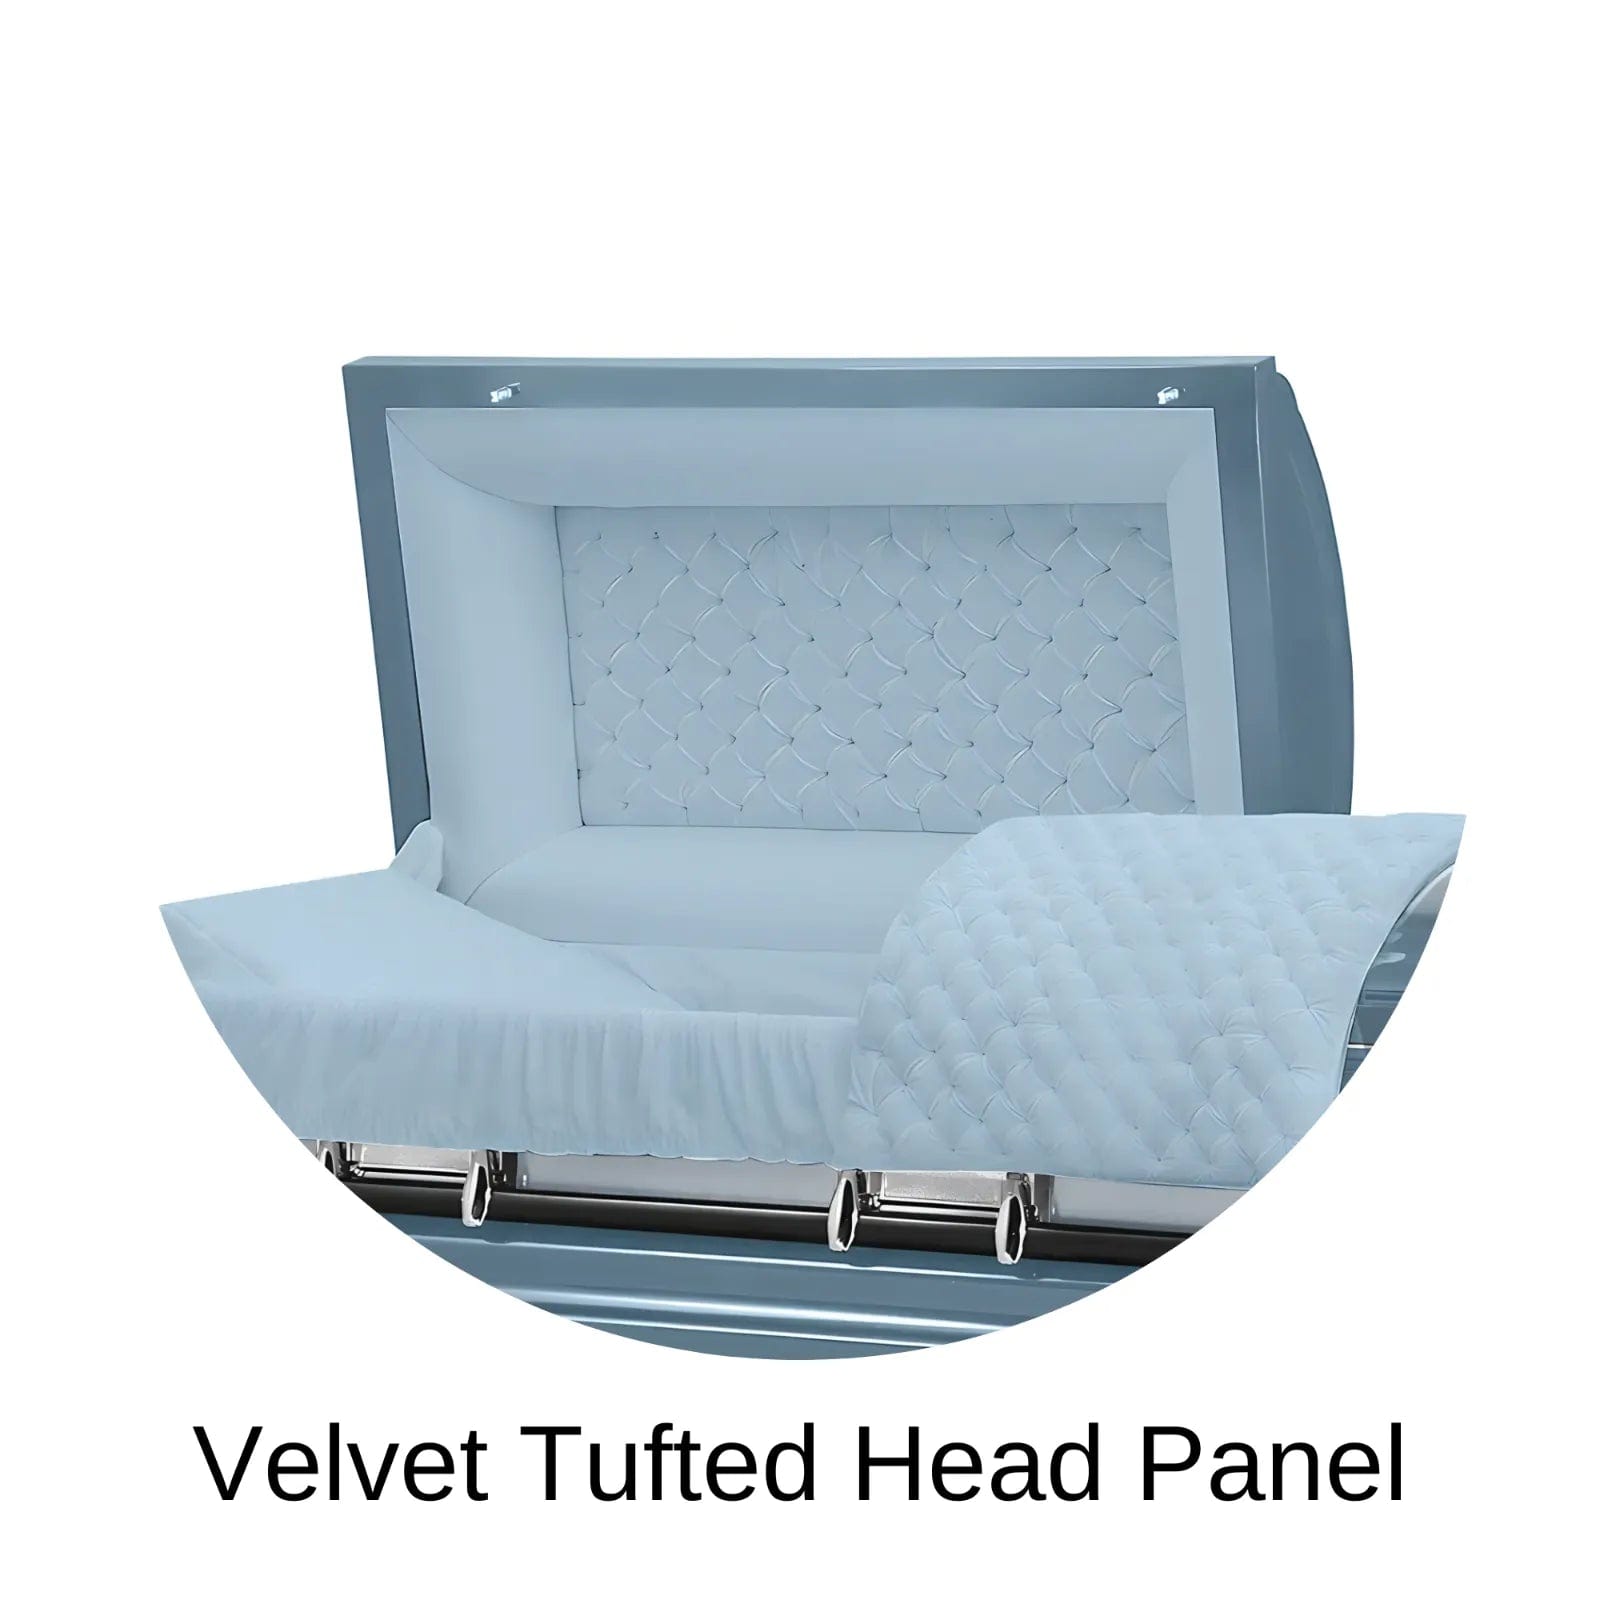 Velvet Tufted head panel of Titan Casket Era Series Casket